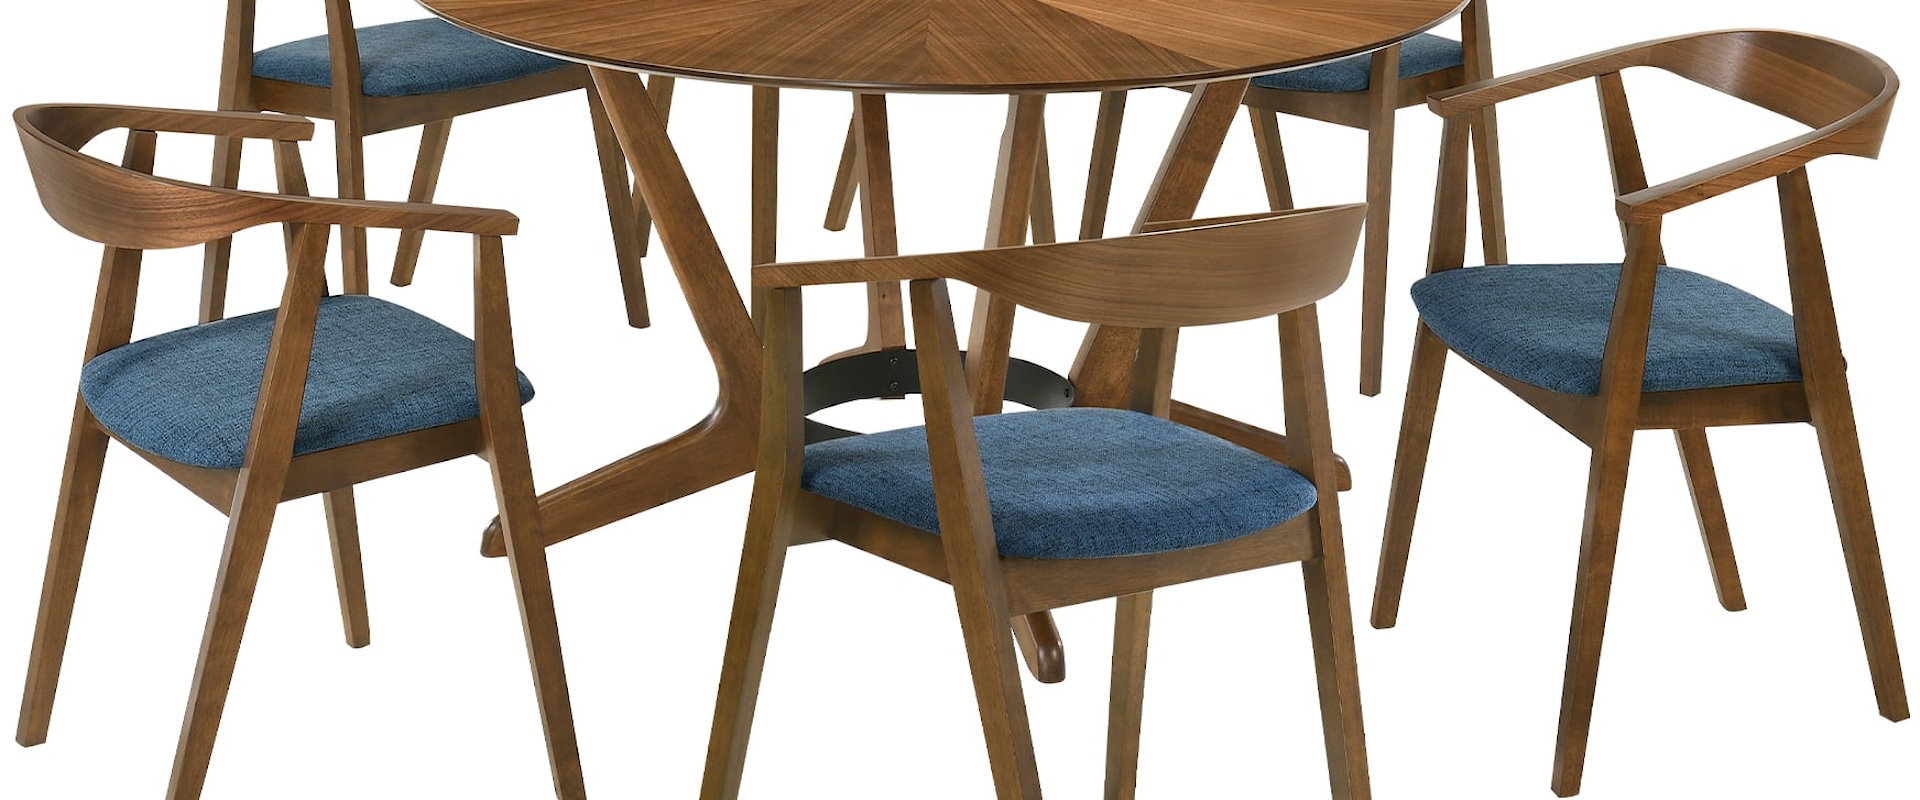 Mid-Century Modern 7-Piece Round Wood Dining Table Set